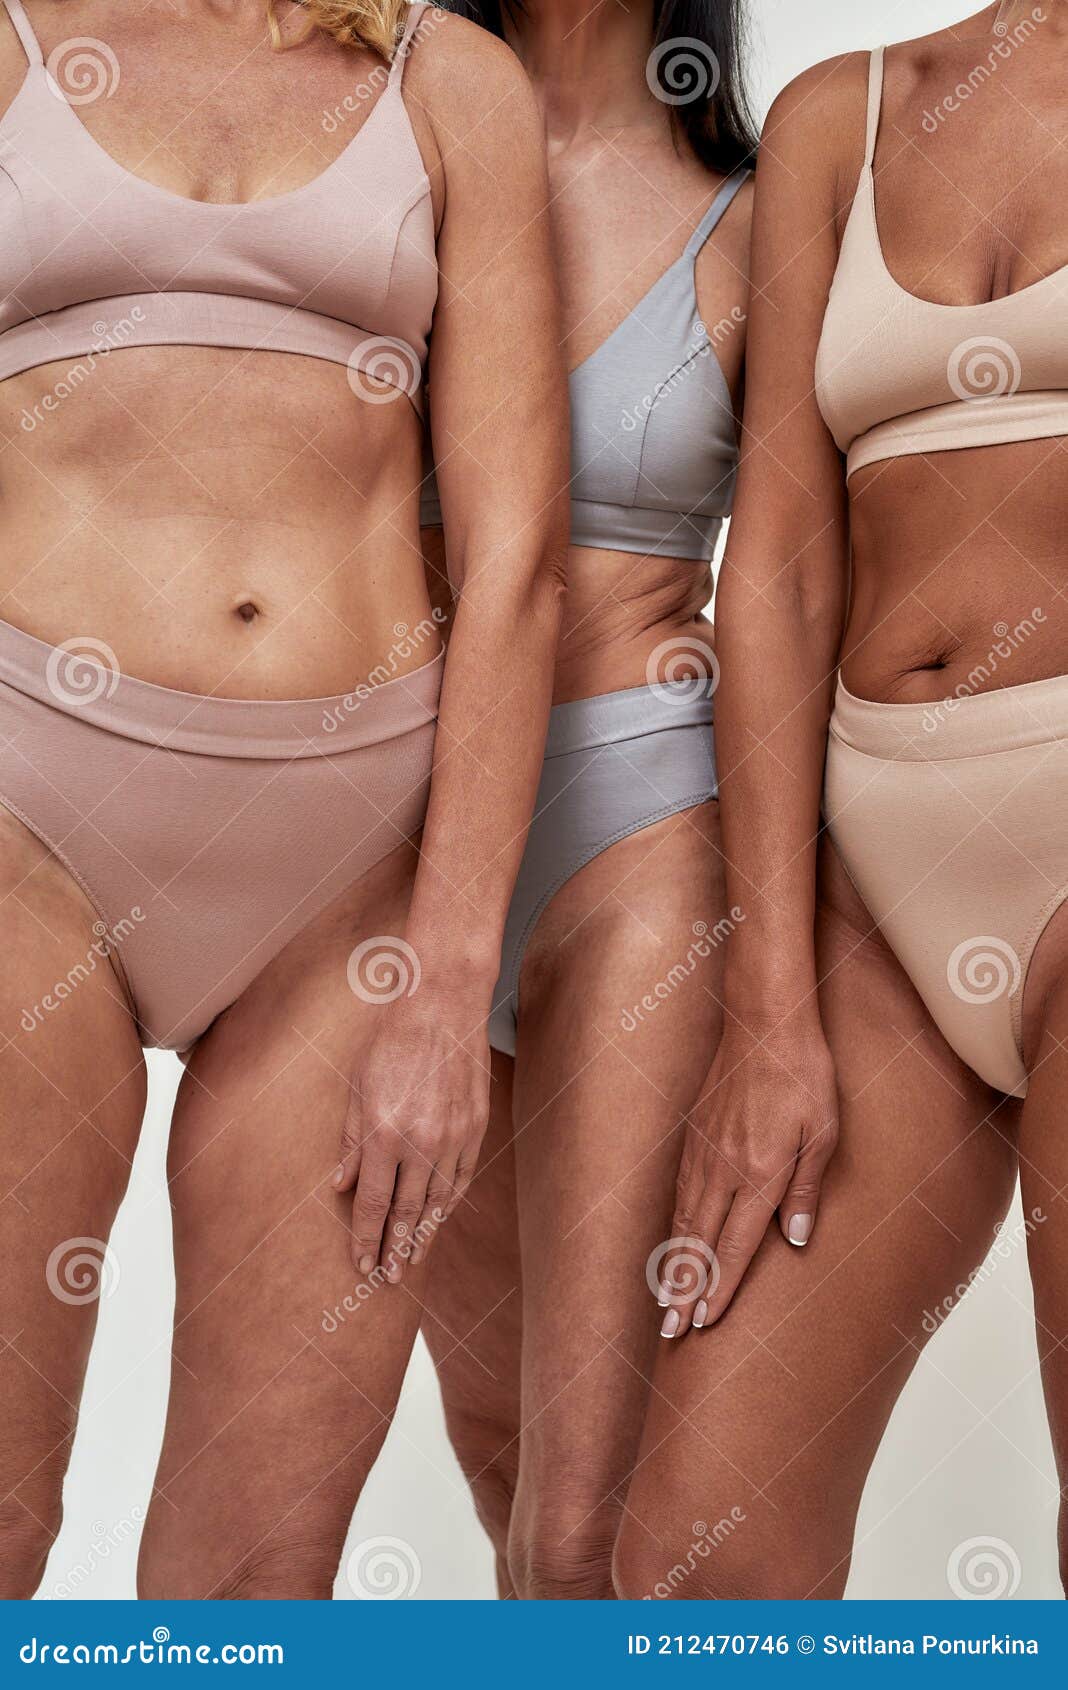 daniel bato add photo natural older women naked